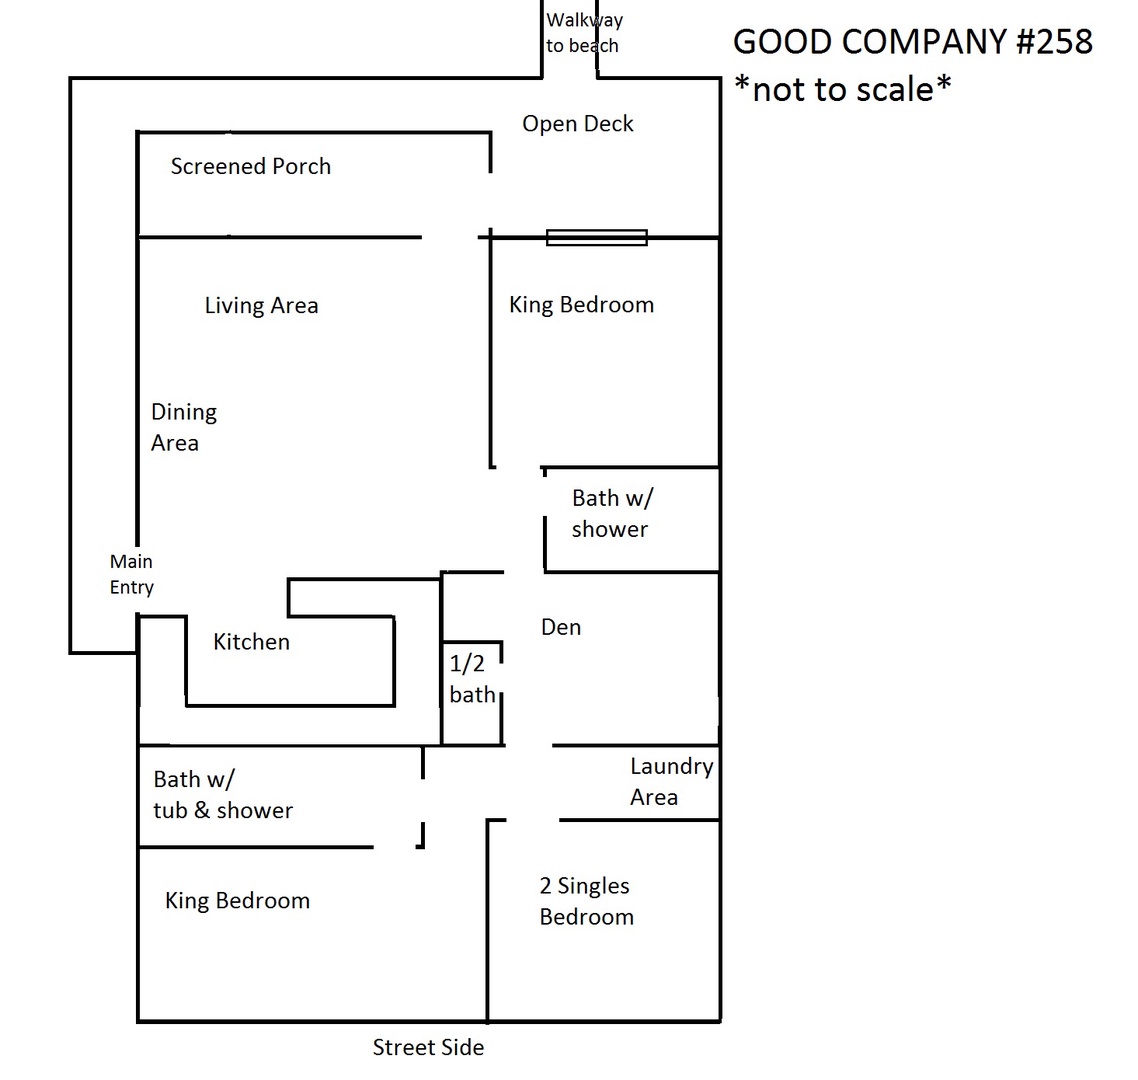 3 258 Good Company floor plan